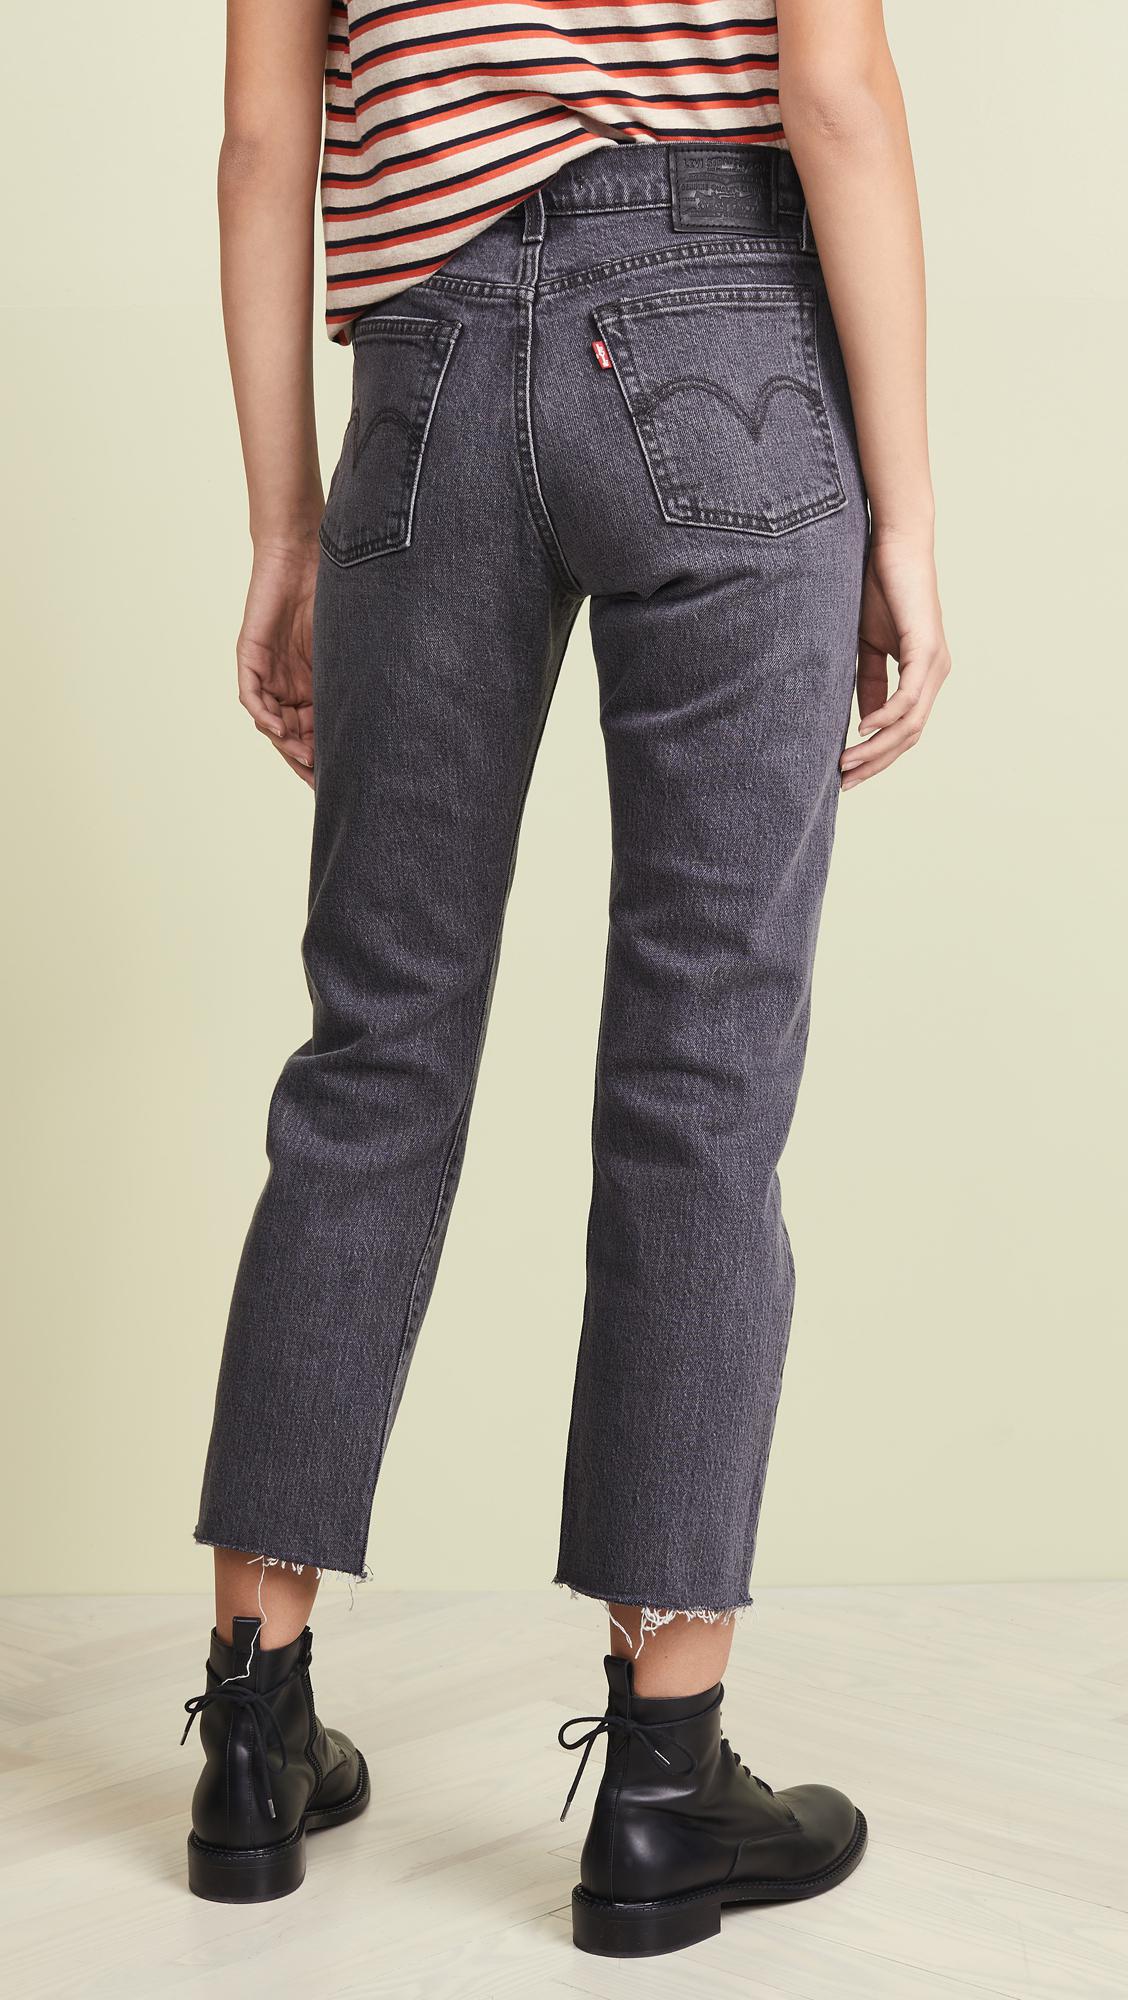 Levi's Denim Wedgie Straight Jeans in Black